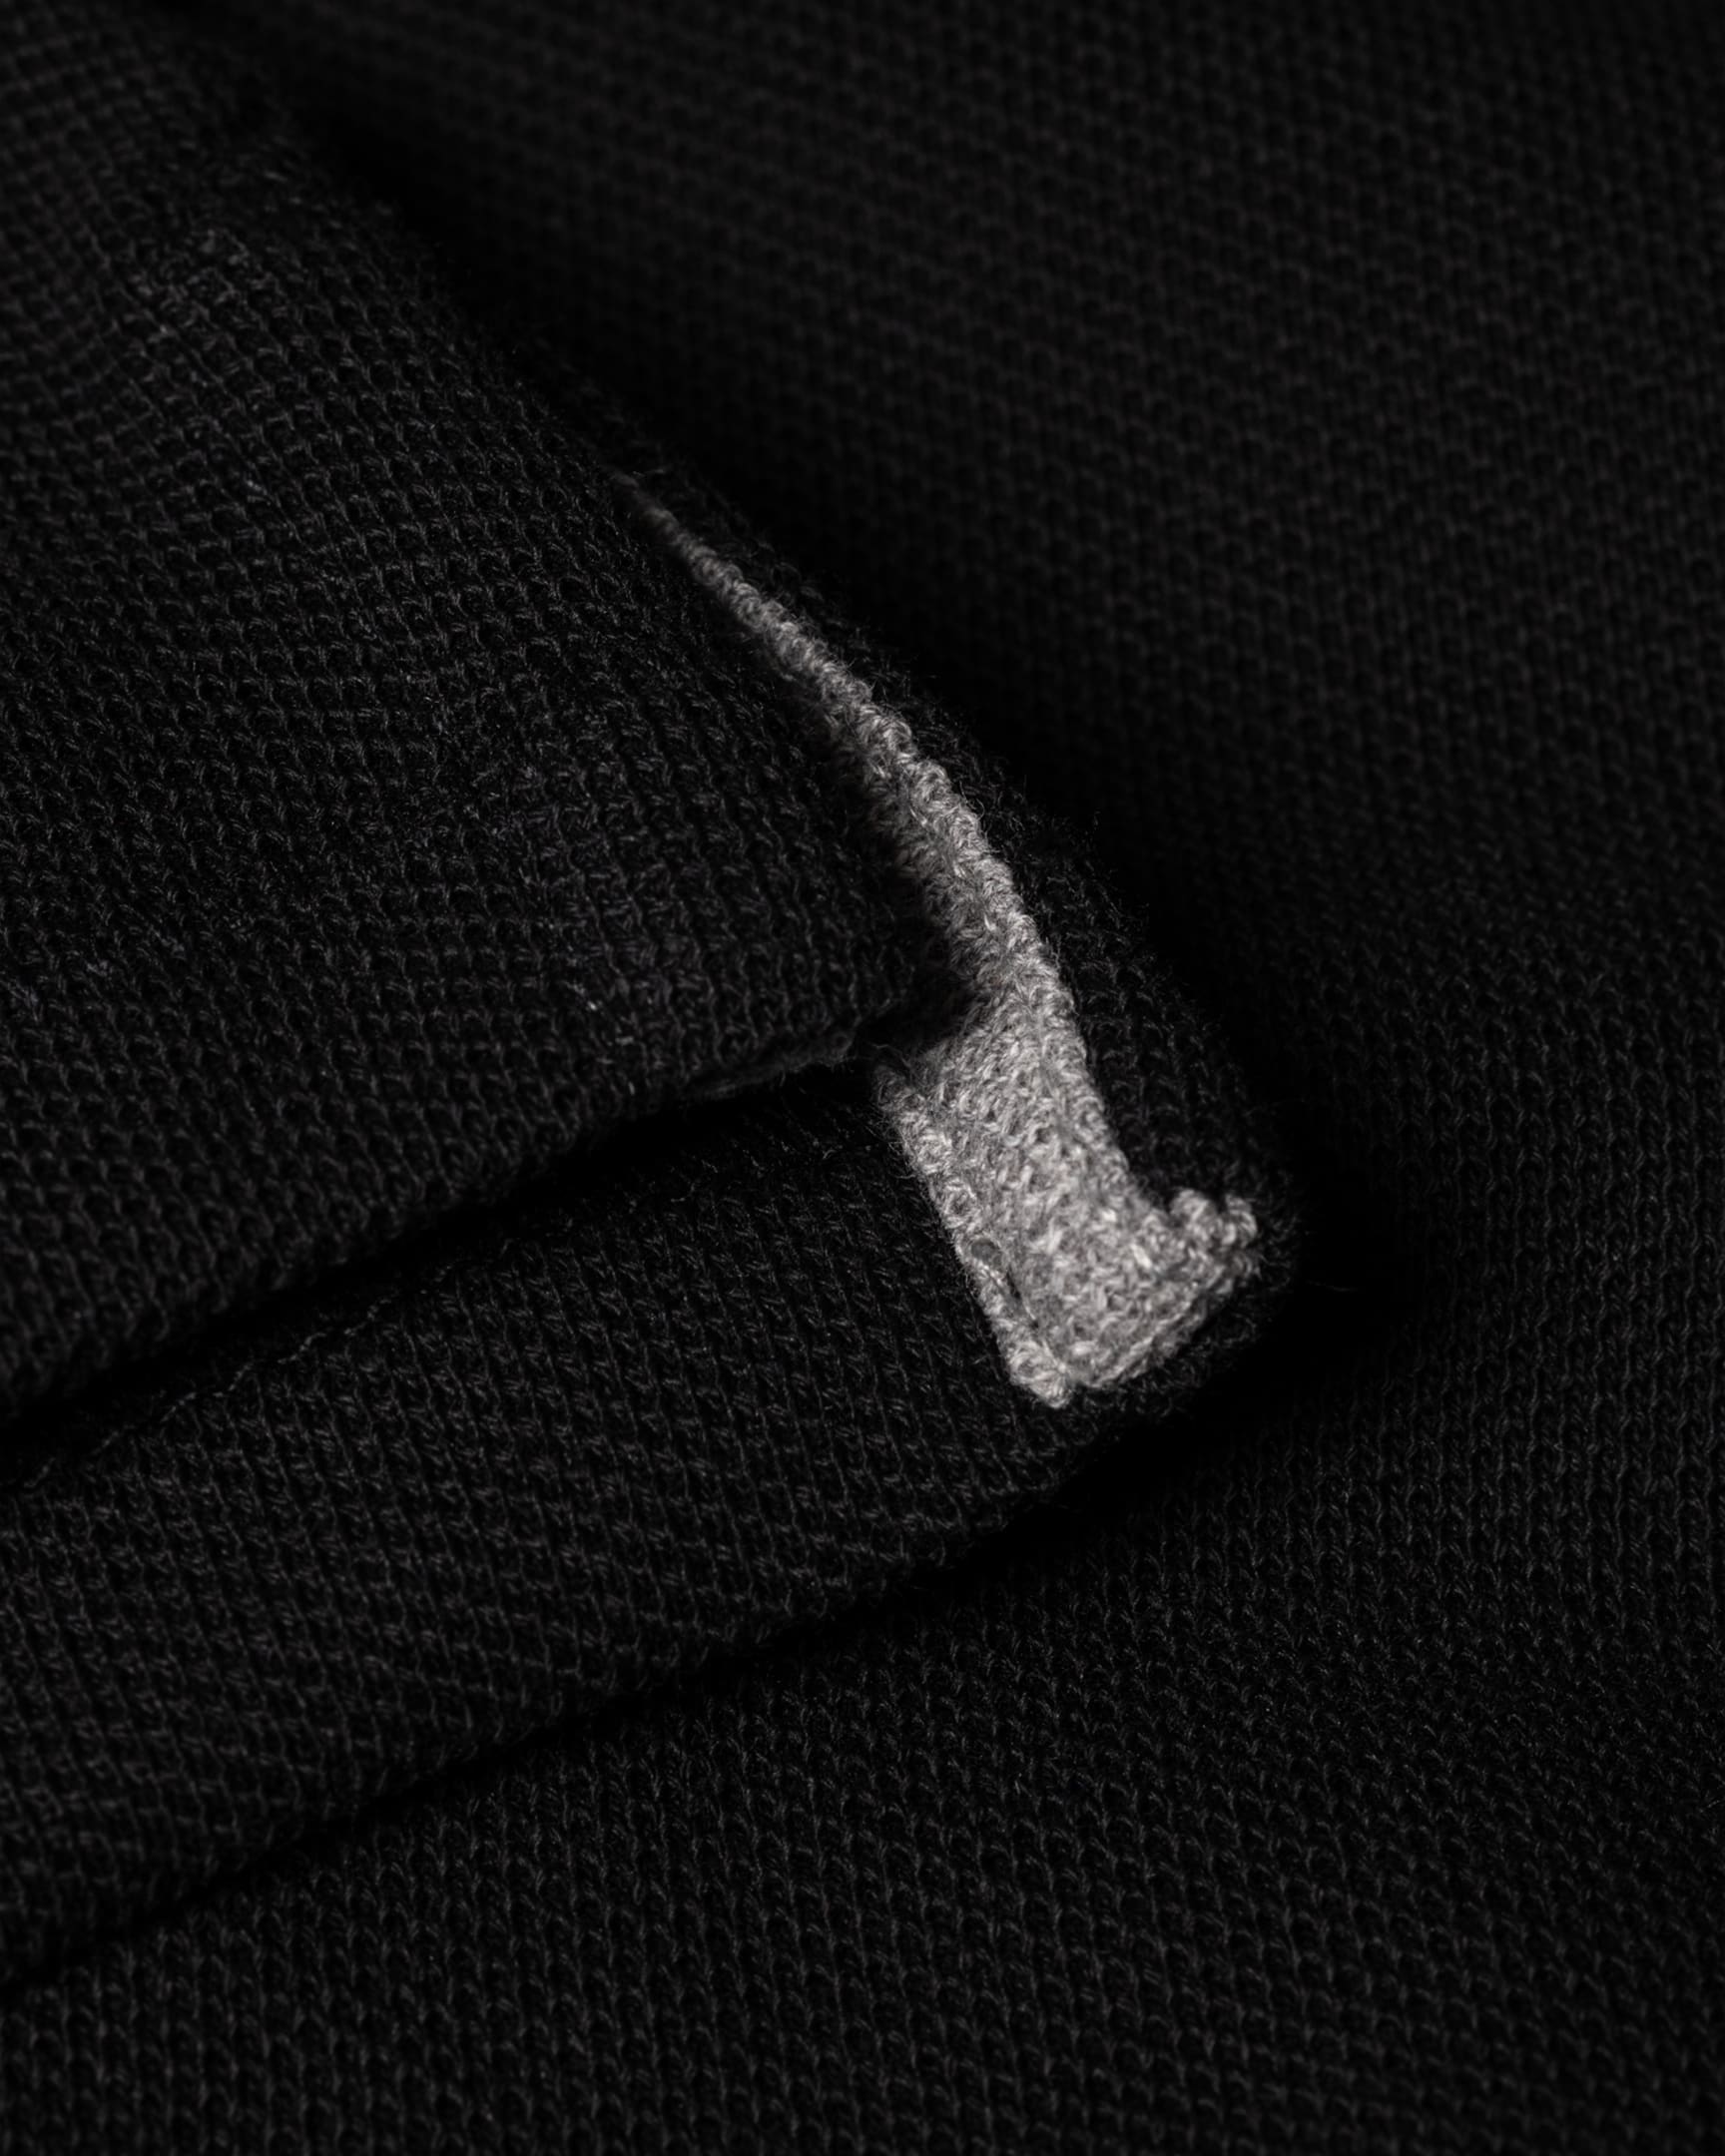 Detail View - Black Cotton Zebra Logo Long-Sleeve Polo Shirt Paul Smith 